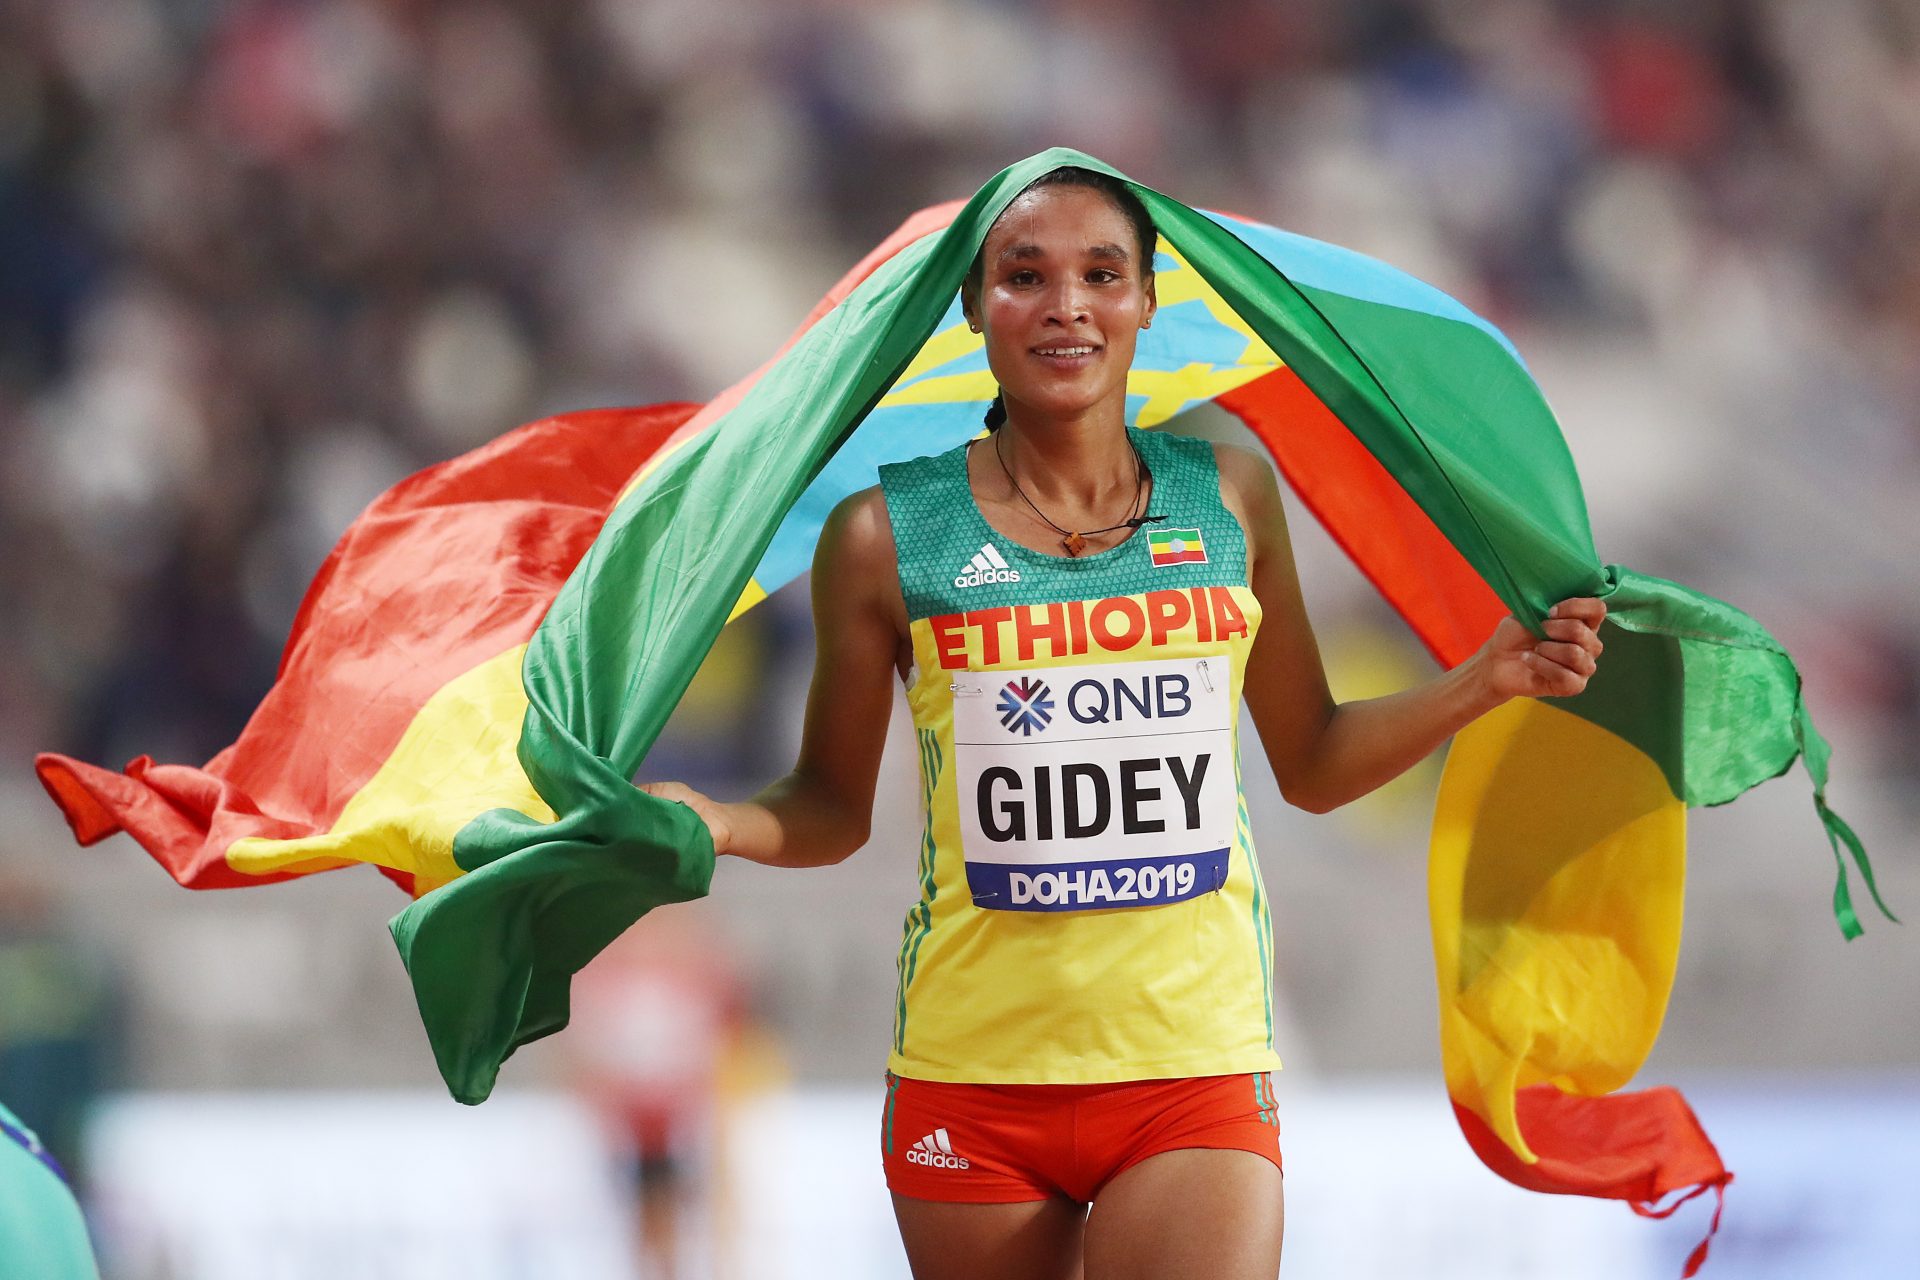 Women's 10,000m: 29:01.03 - Letesenbet Gidey